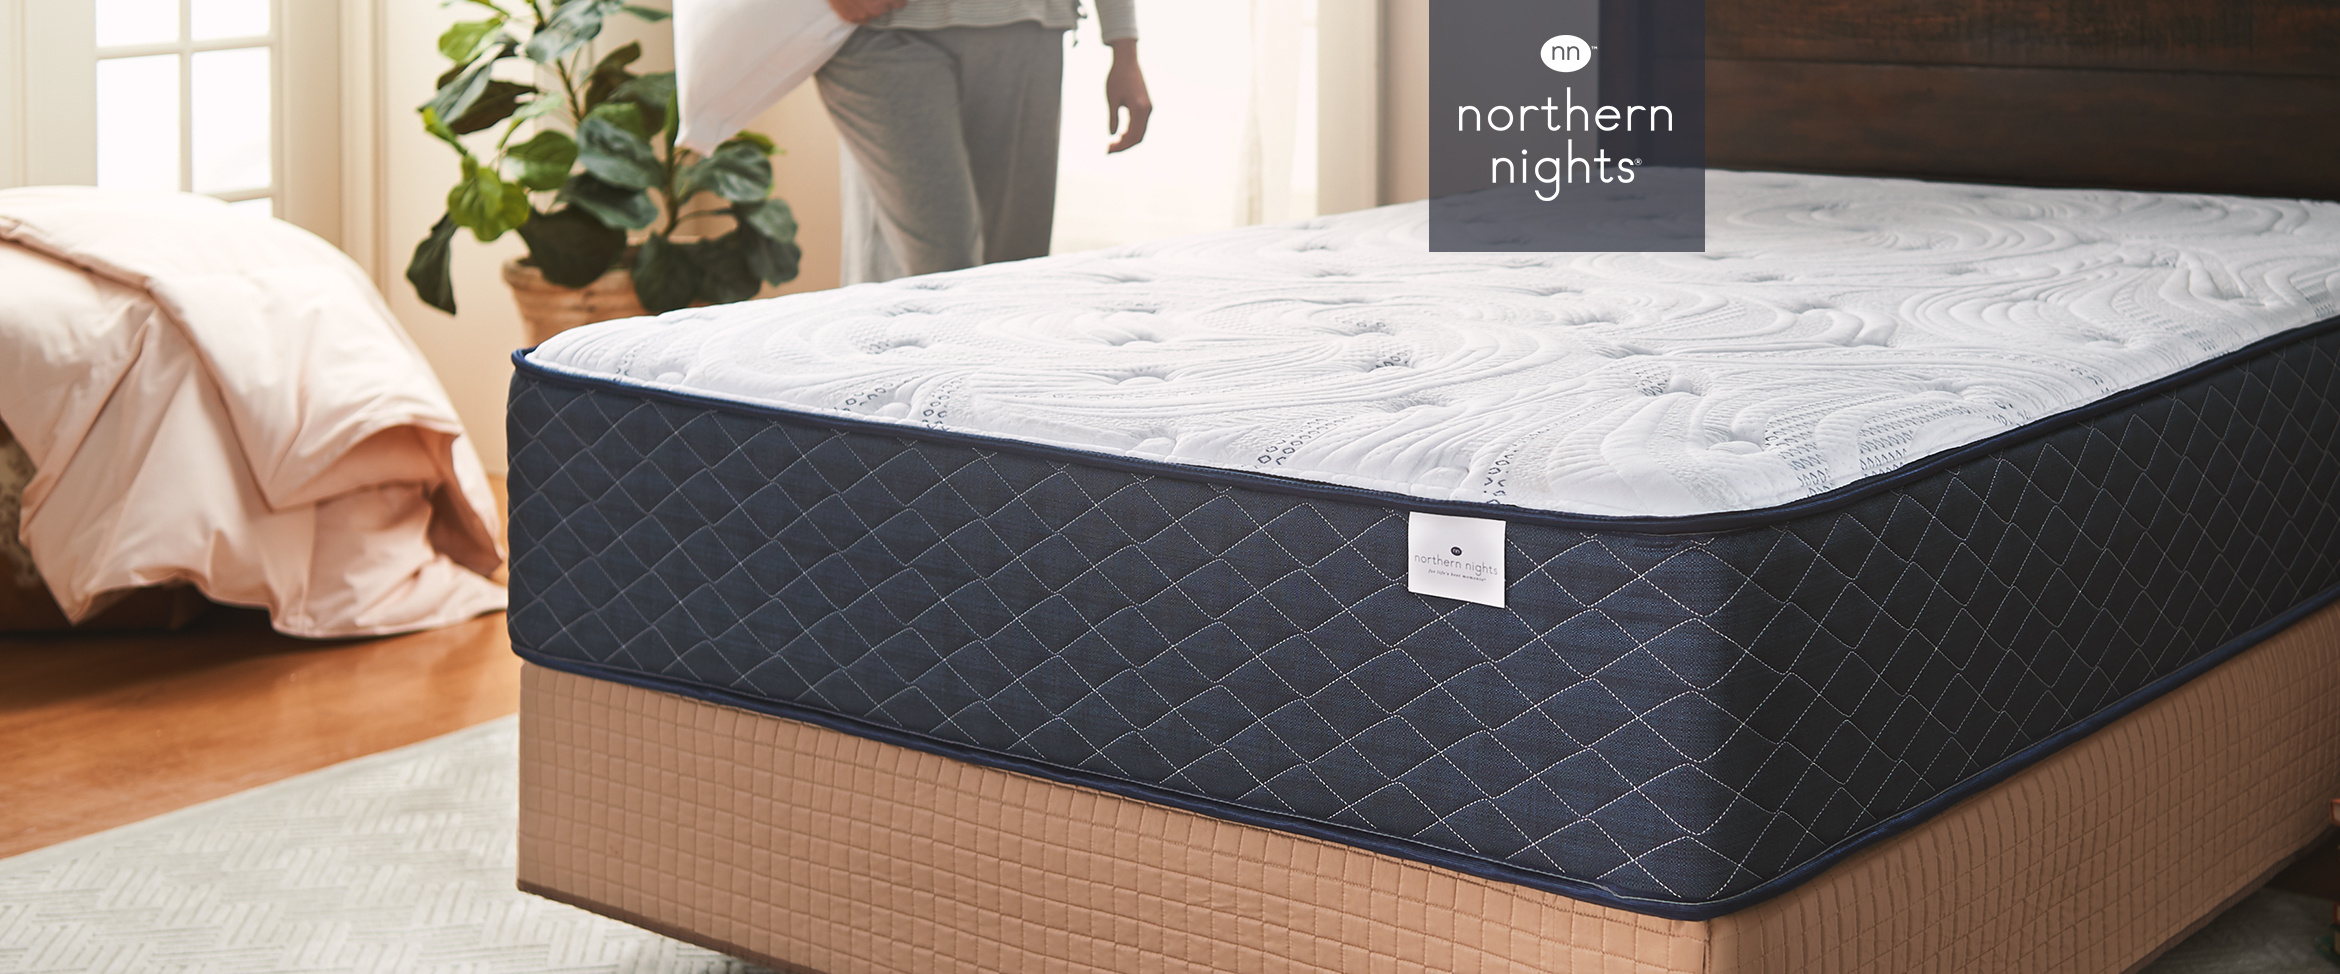 northern nights hybrid mattress